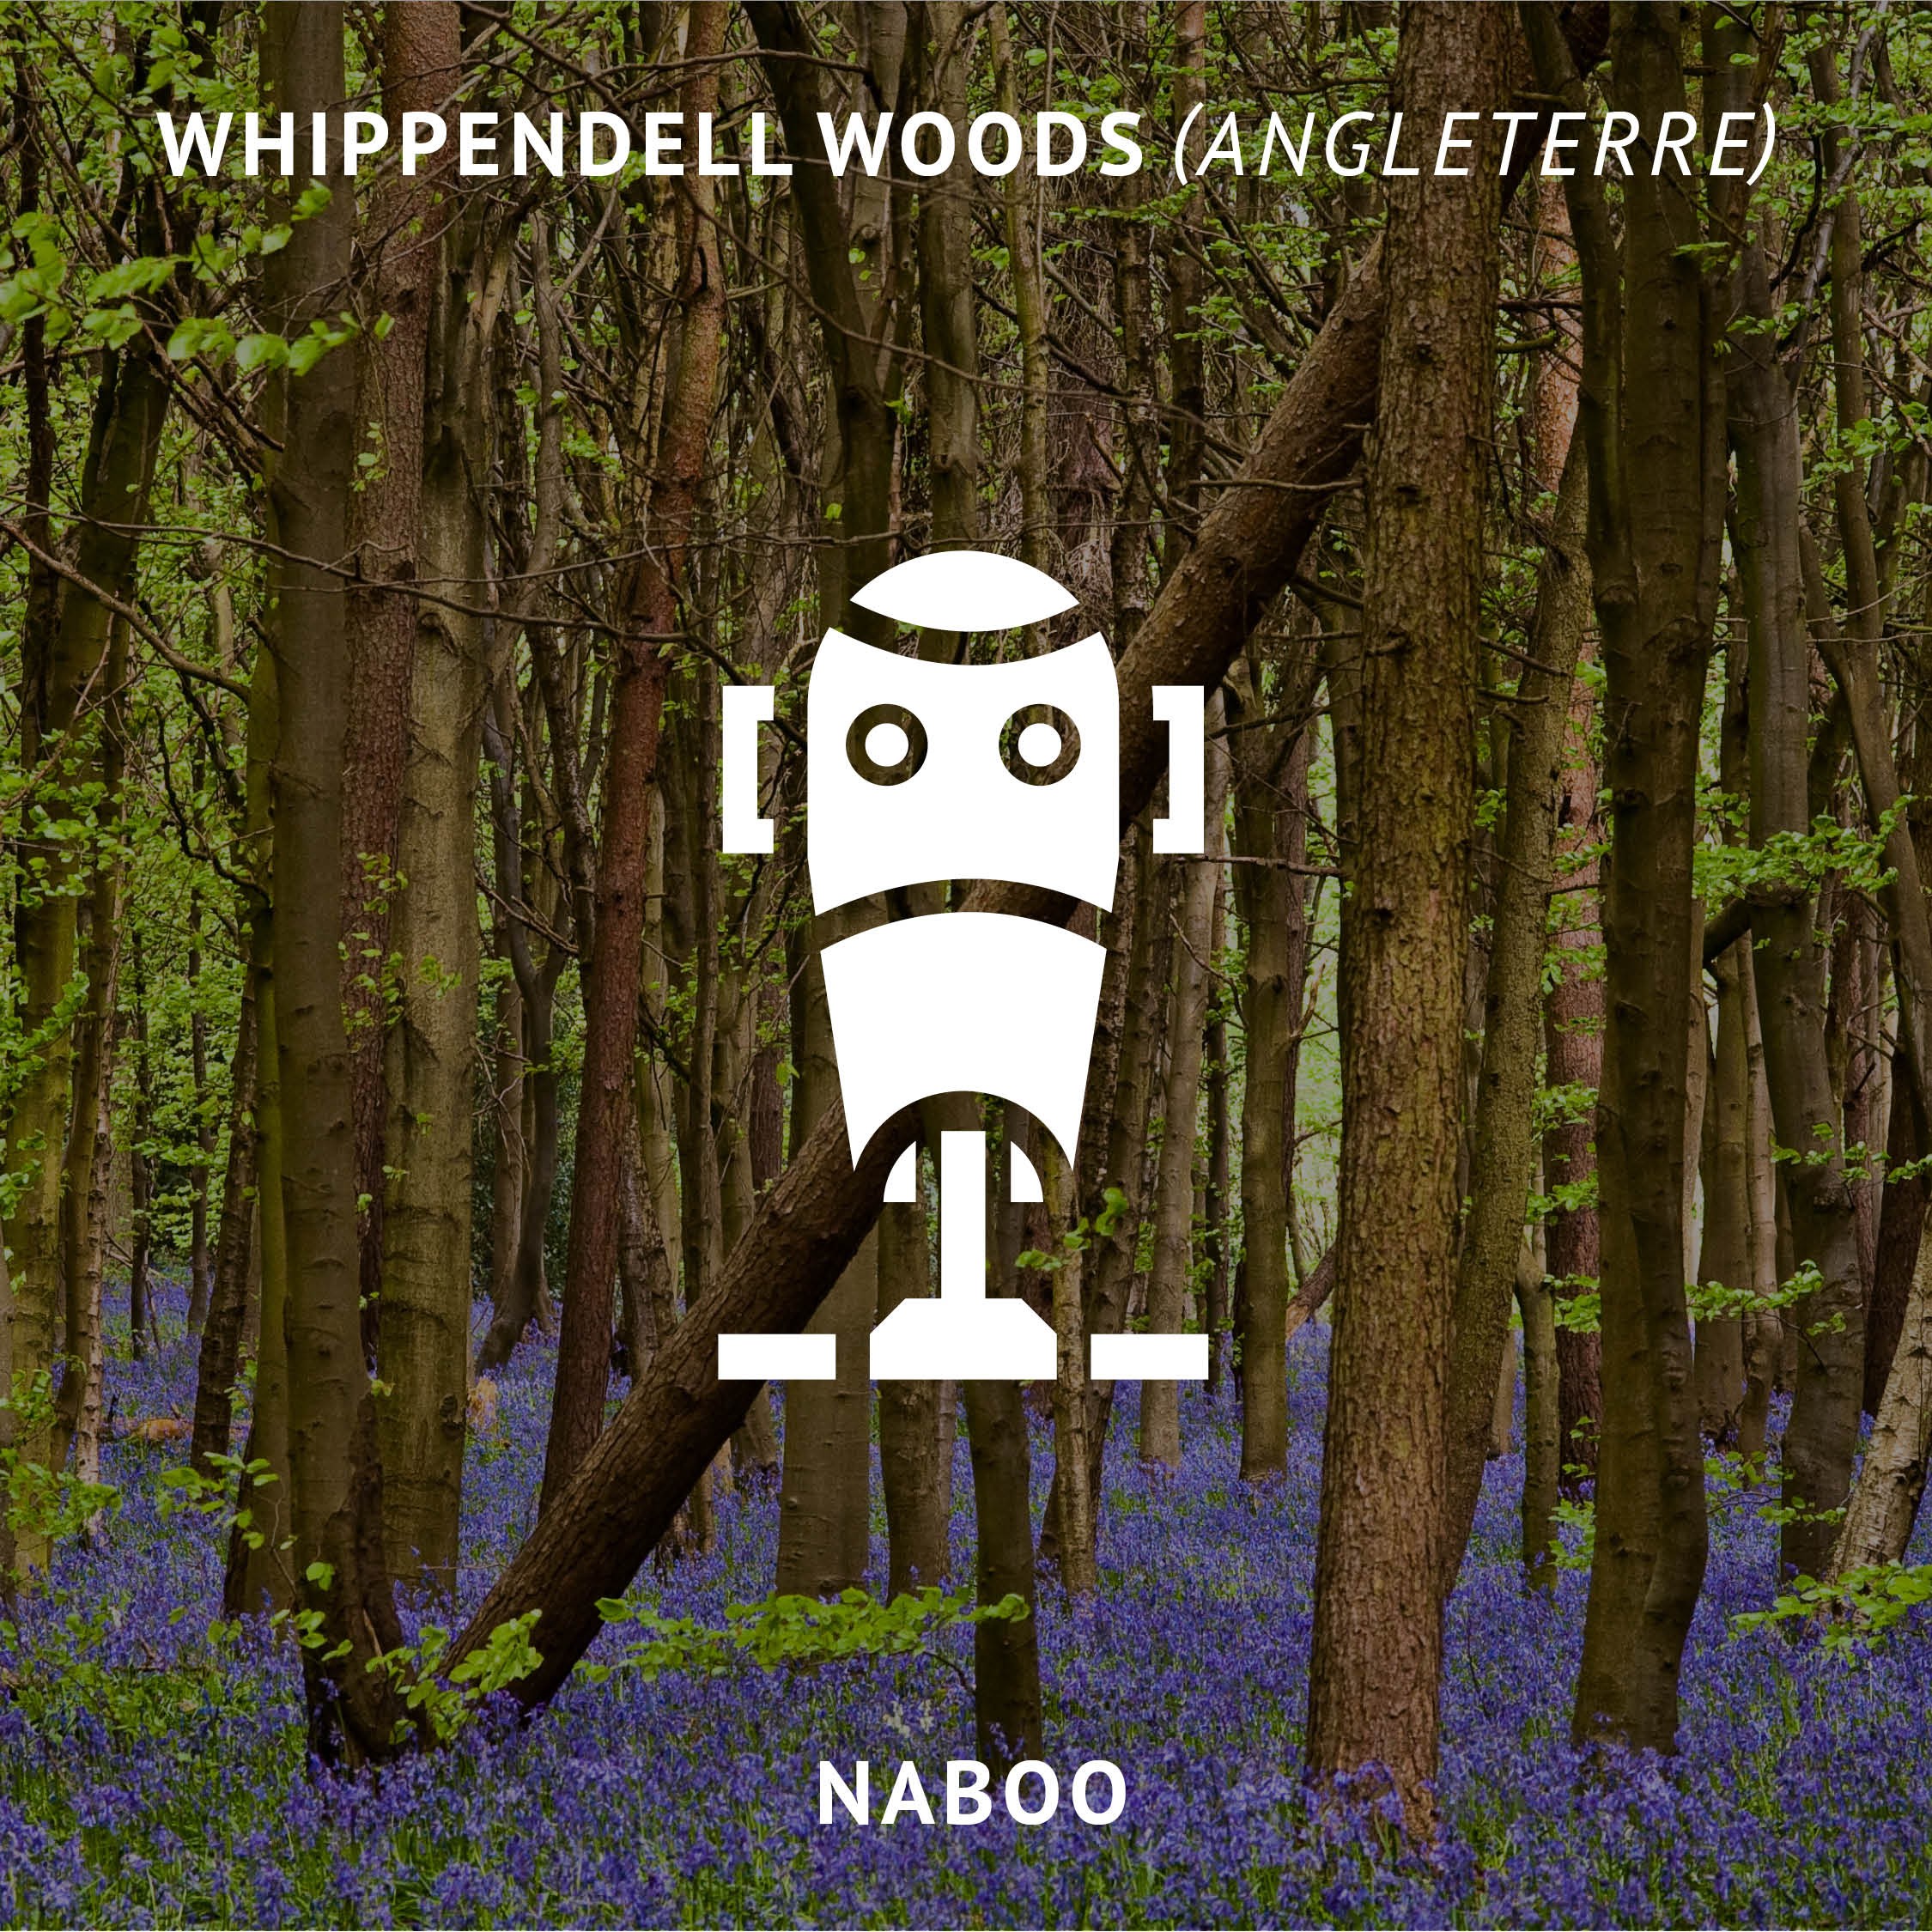 Whippendell Woods à Watford en Angleterre